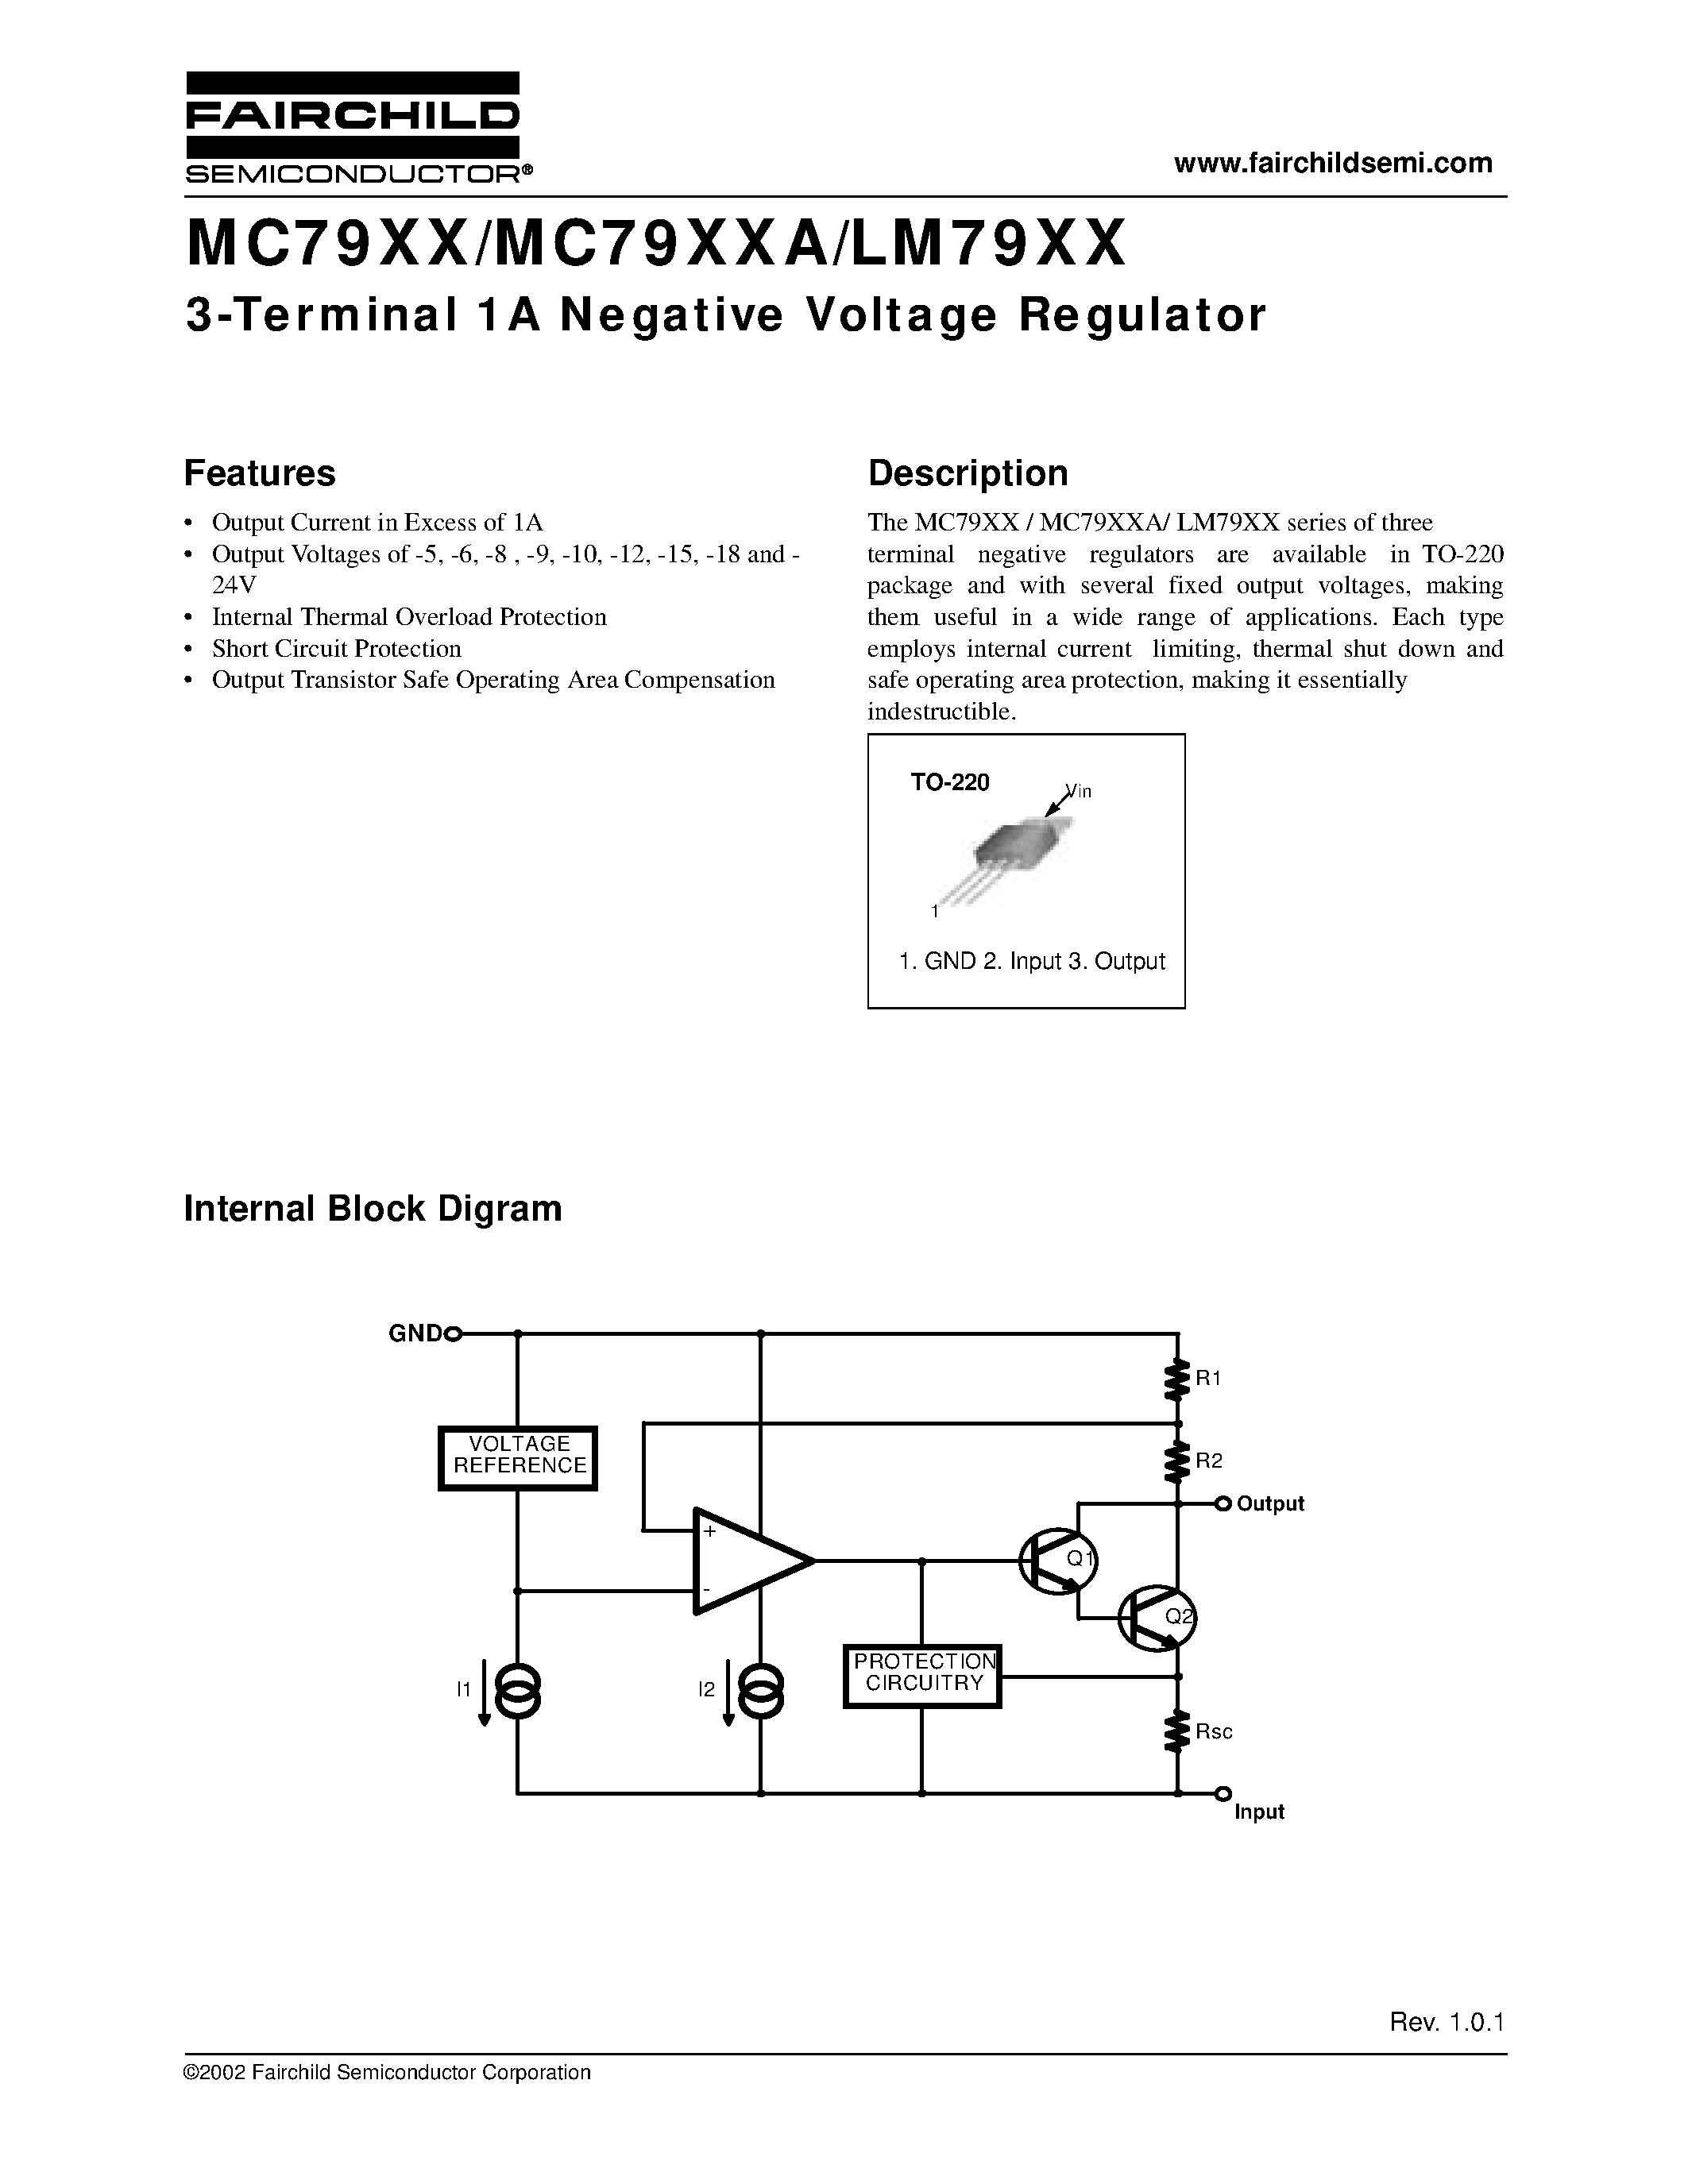 Datasheet MC7906 - 3-Terminal 1A Negative Voltage Regulator page 1